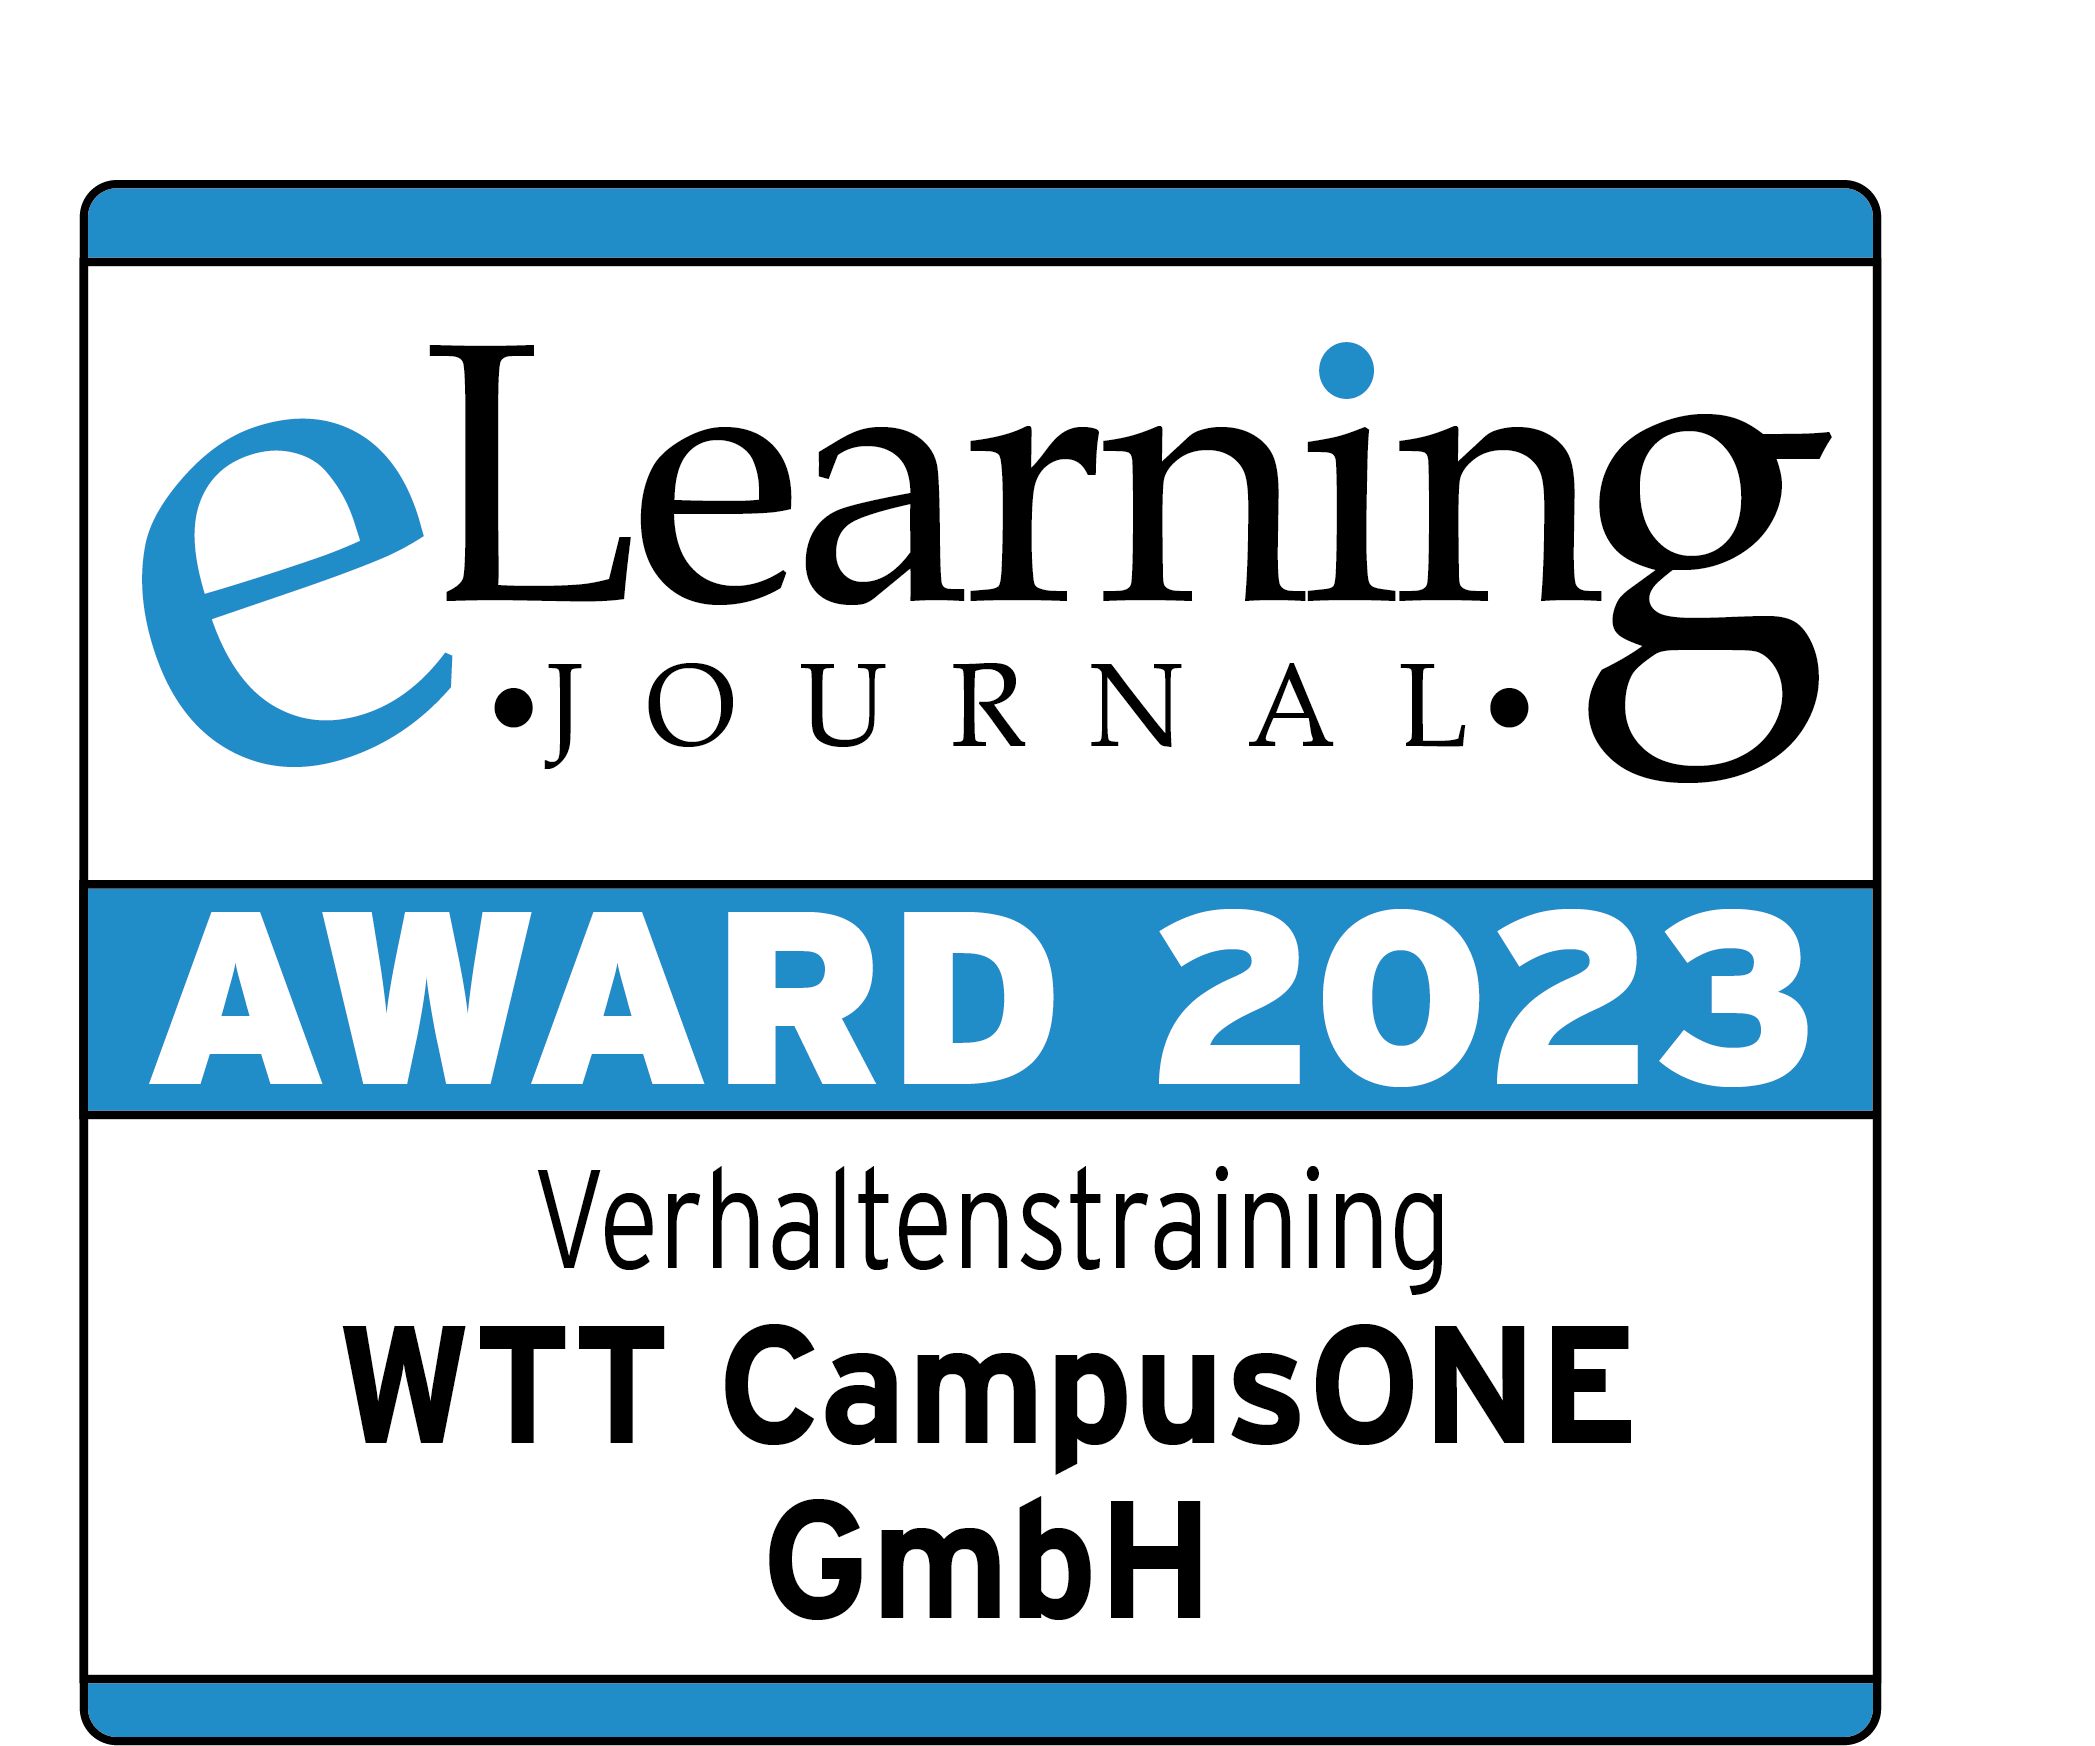 eLearning Award 2023